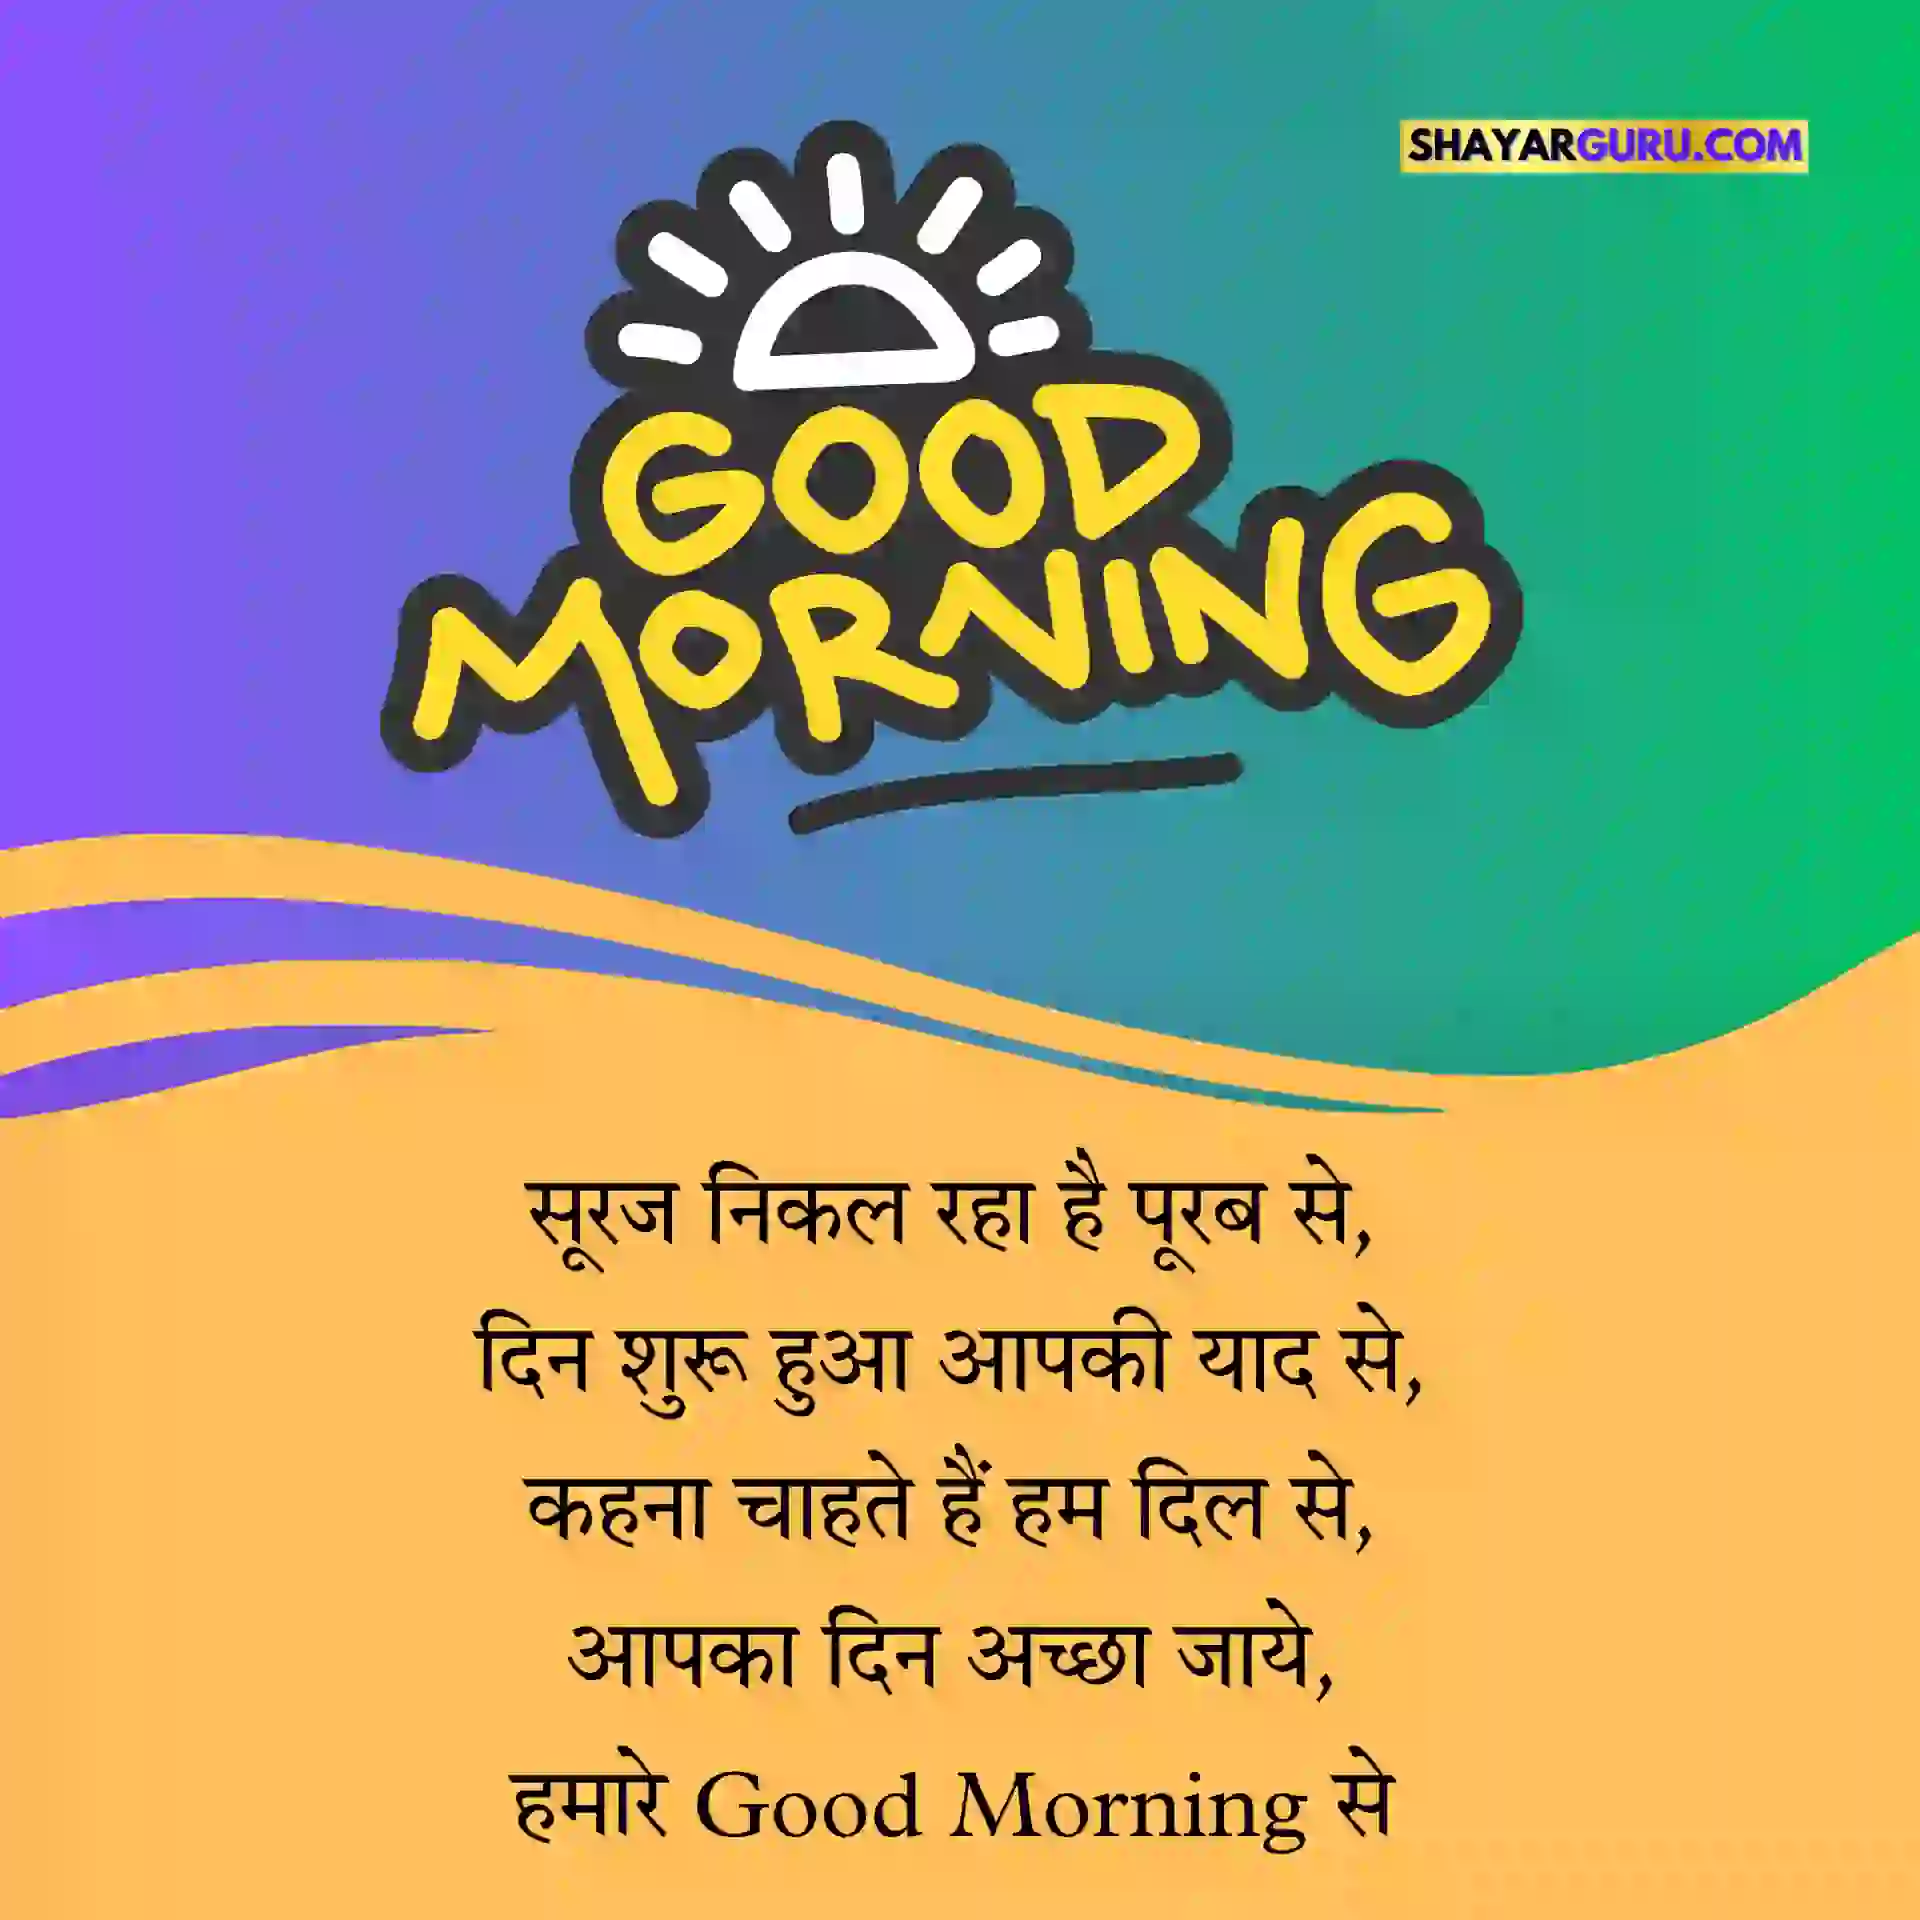 Good morning image in hindi